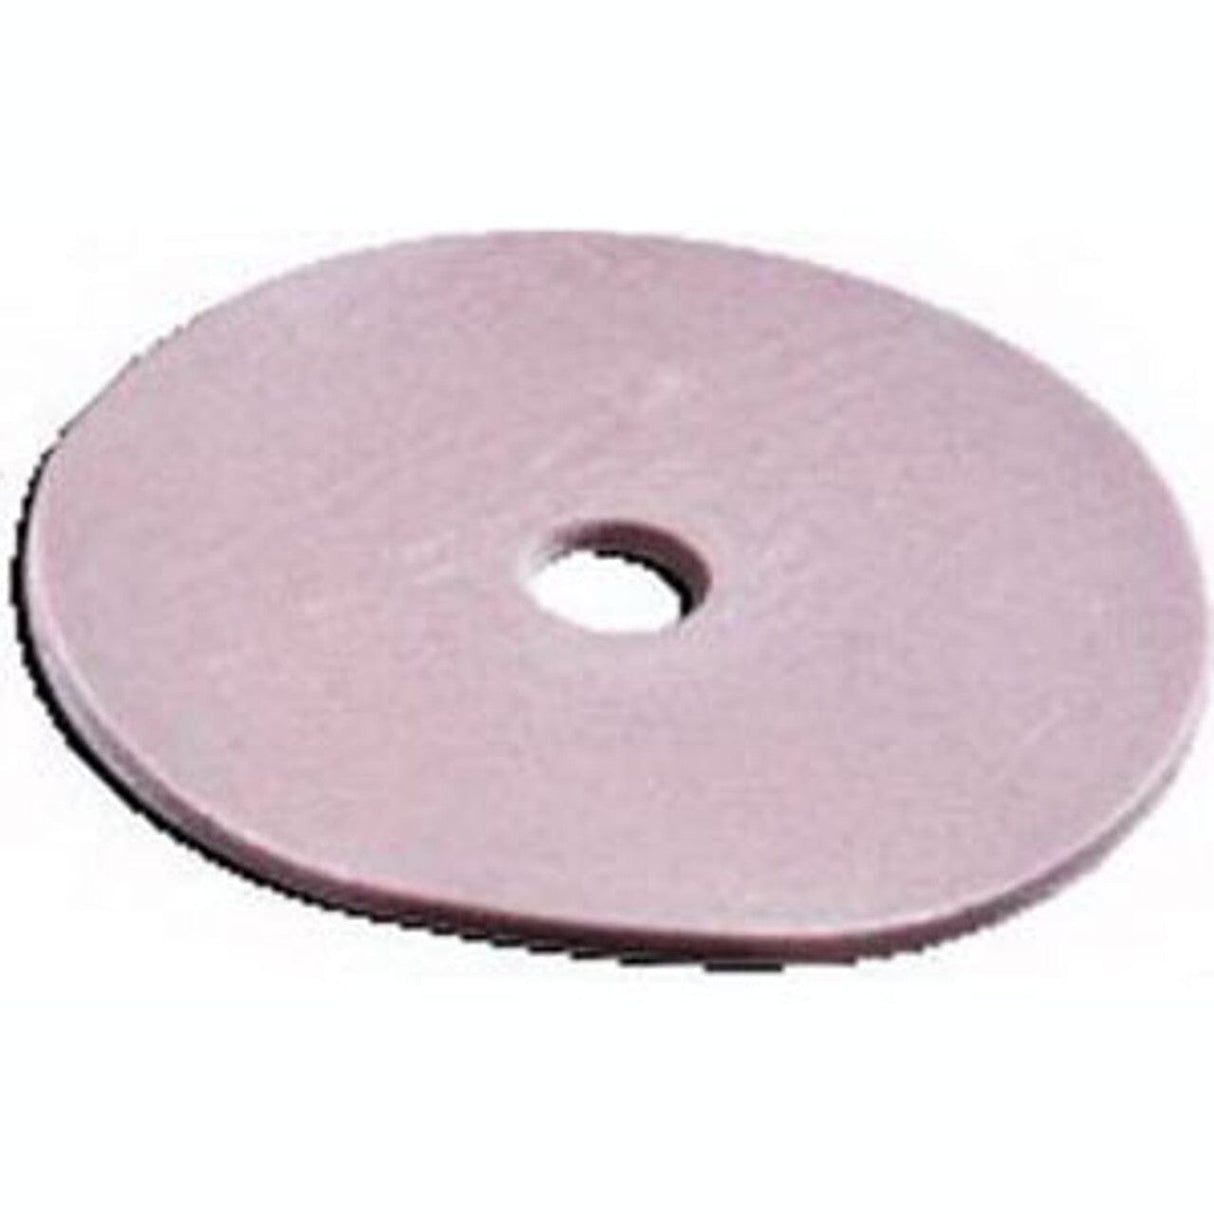 Image of Spec 7/8" Opening Super Thin Discs, Round, 10